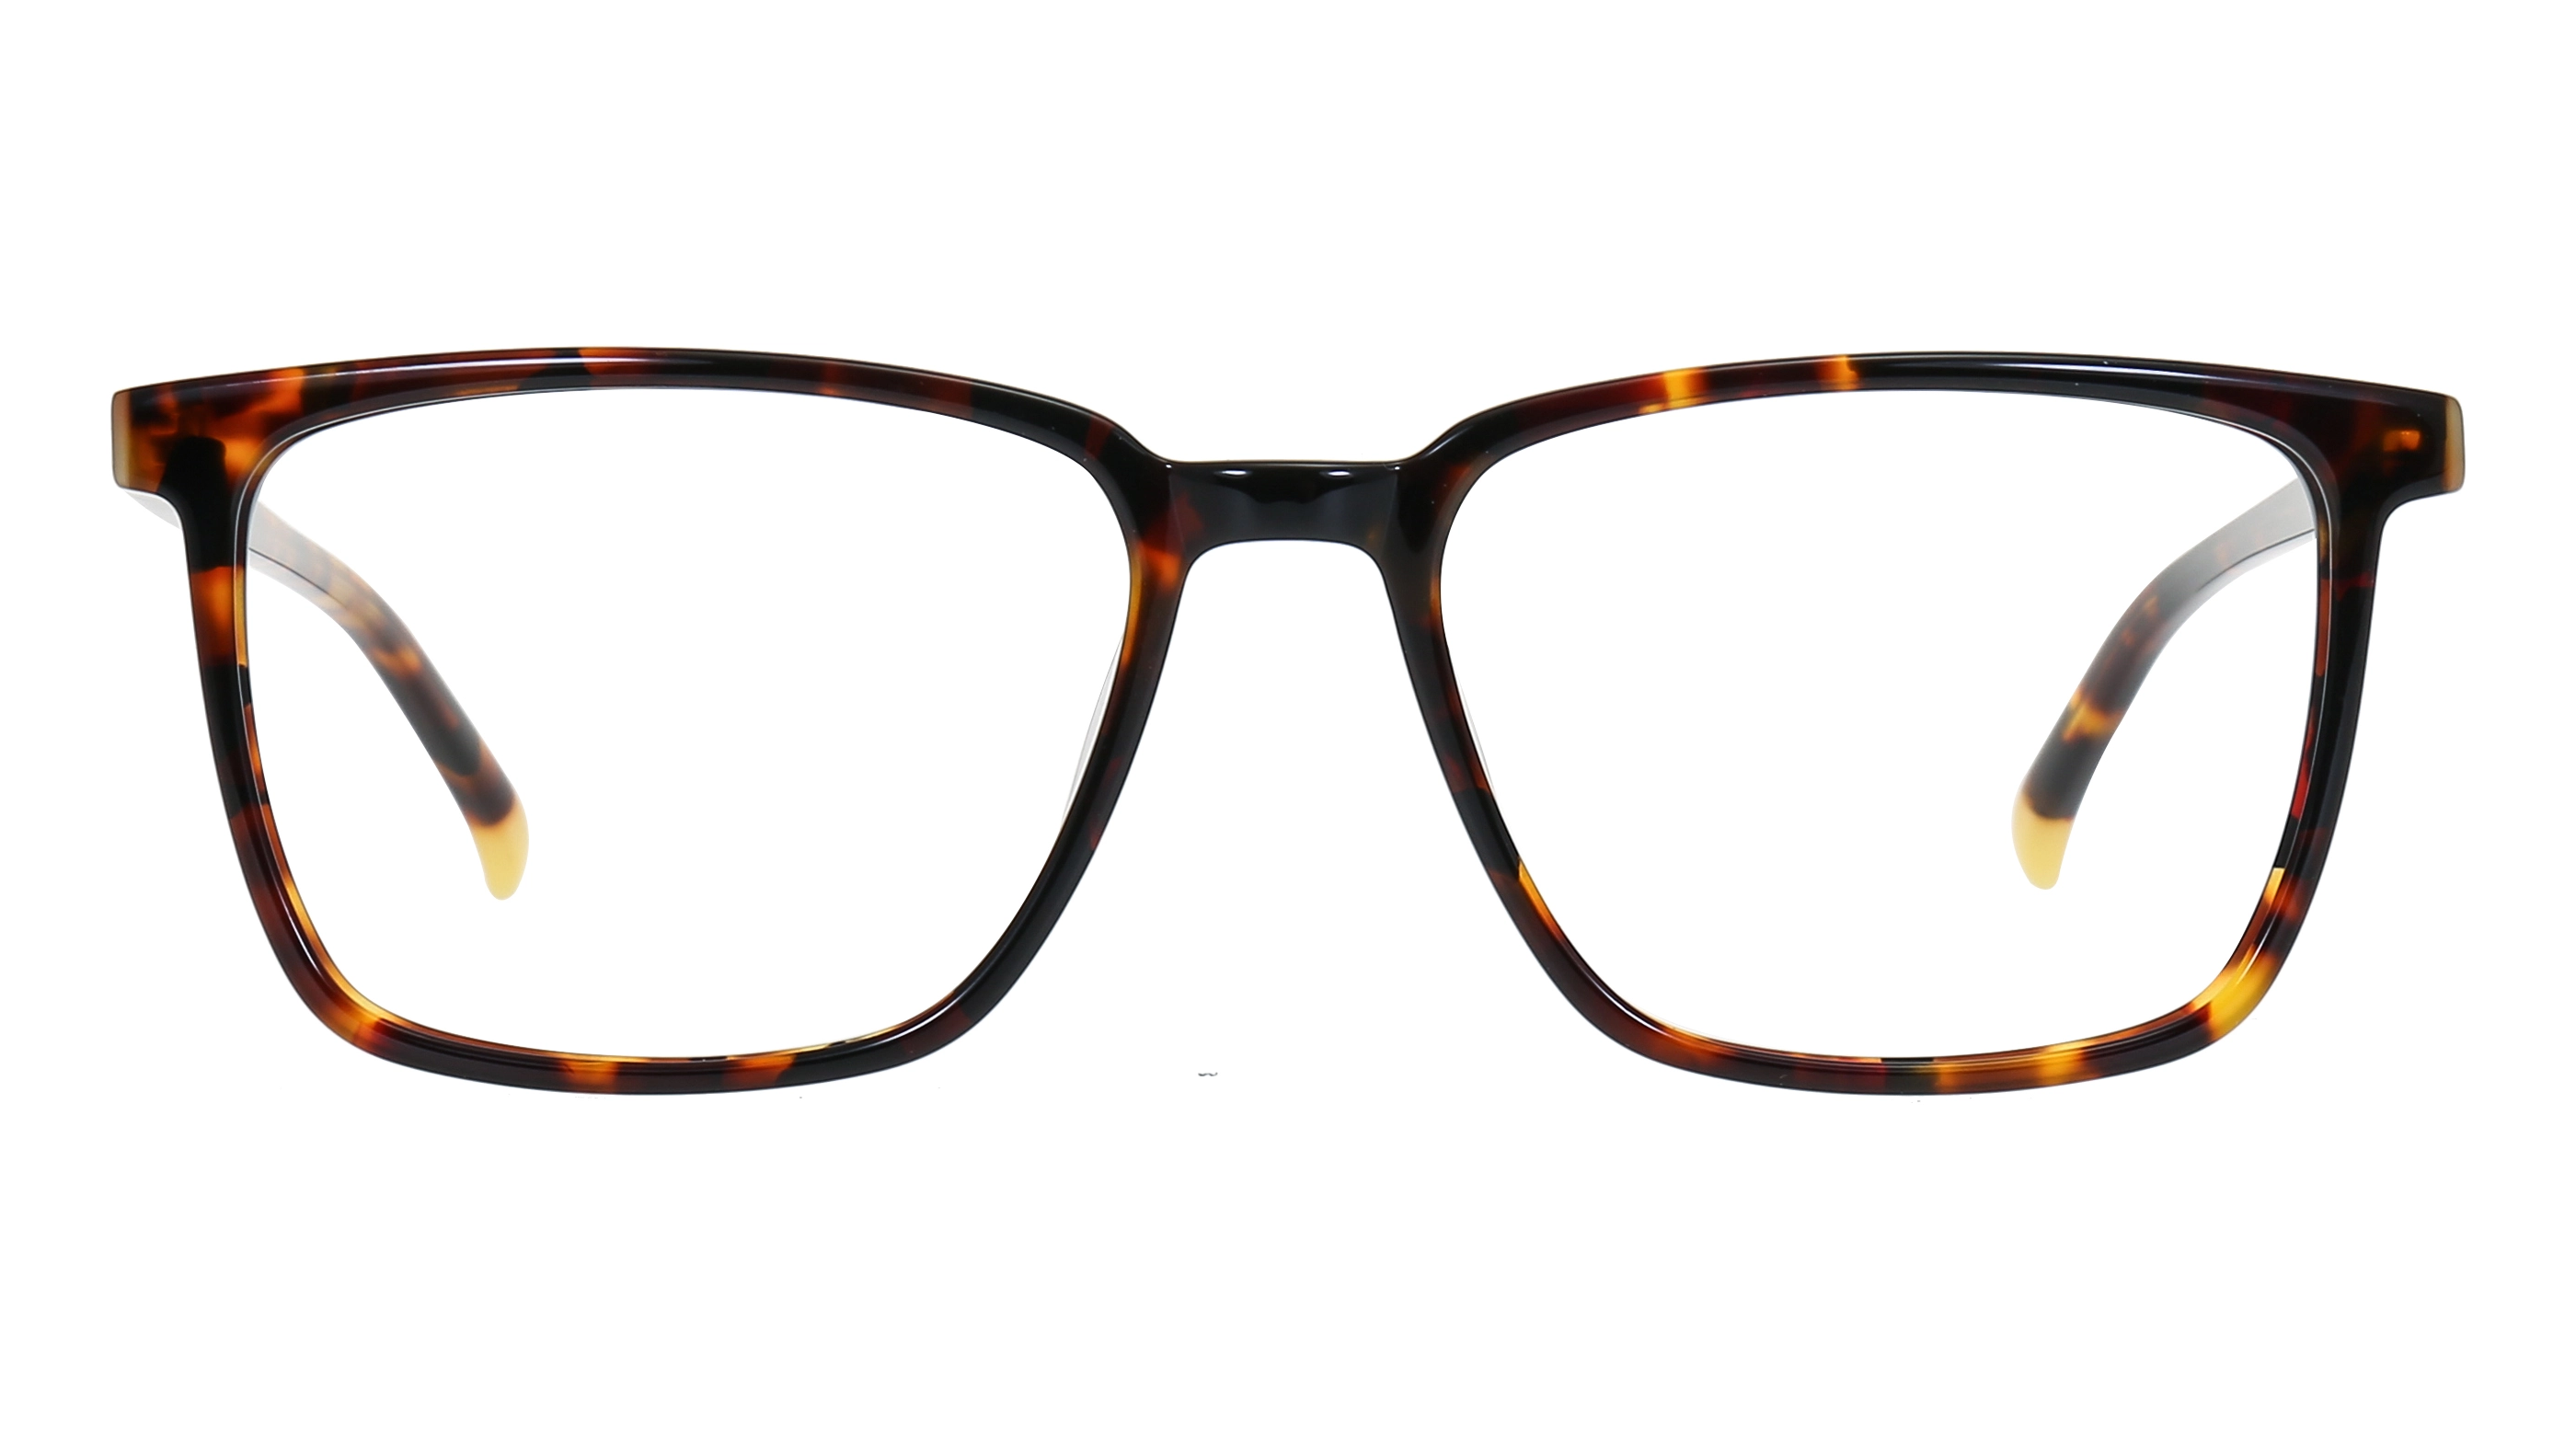 Wholesale Acetate Glasses Frame LM6018